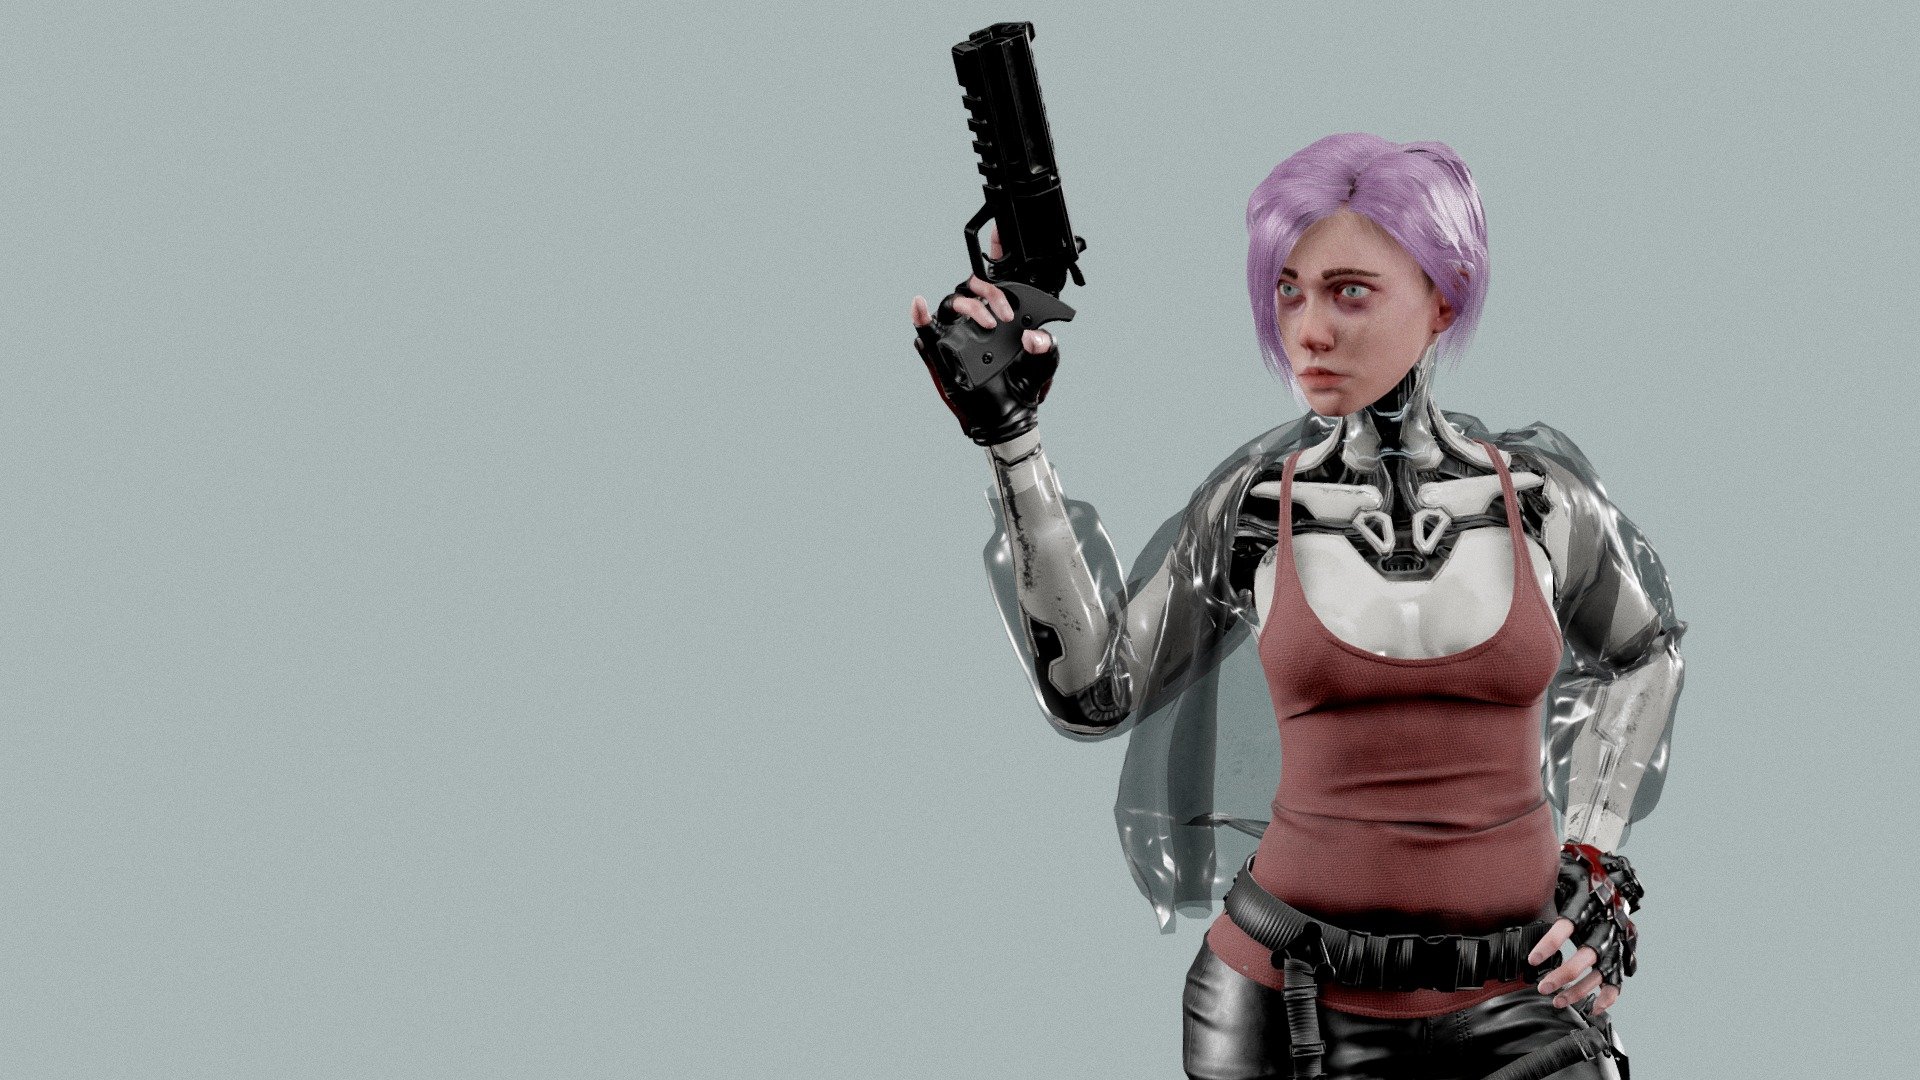 Training model a character - Cyberpunk Girl - 3D model by AlanBah 3d model